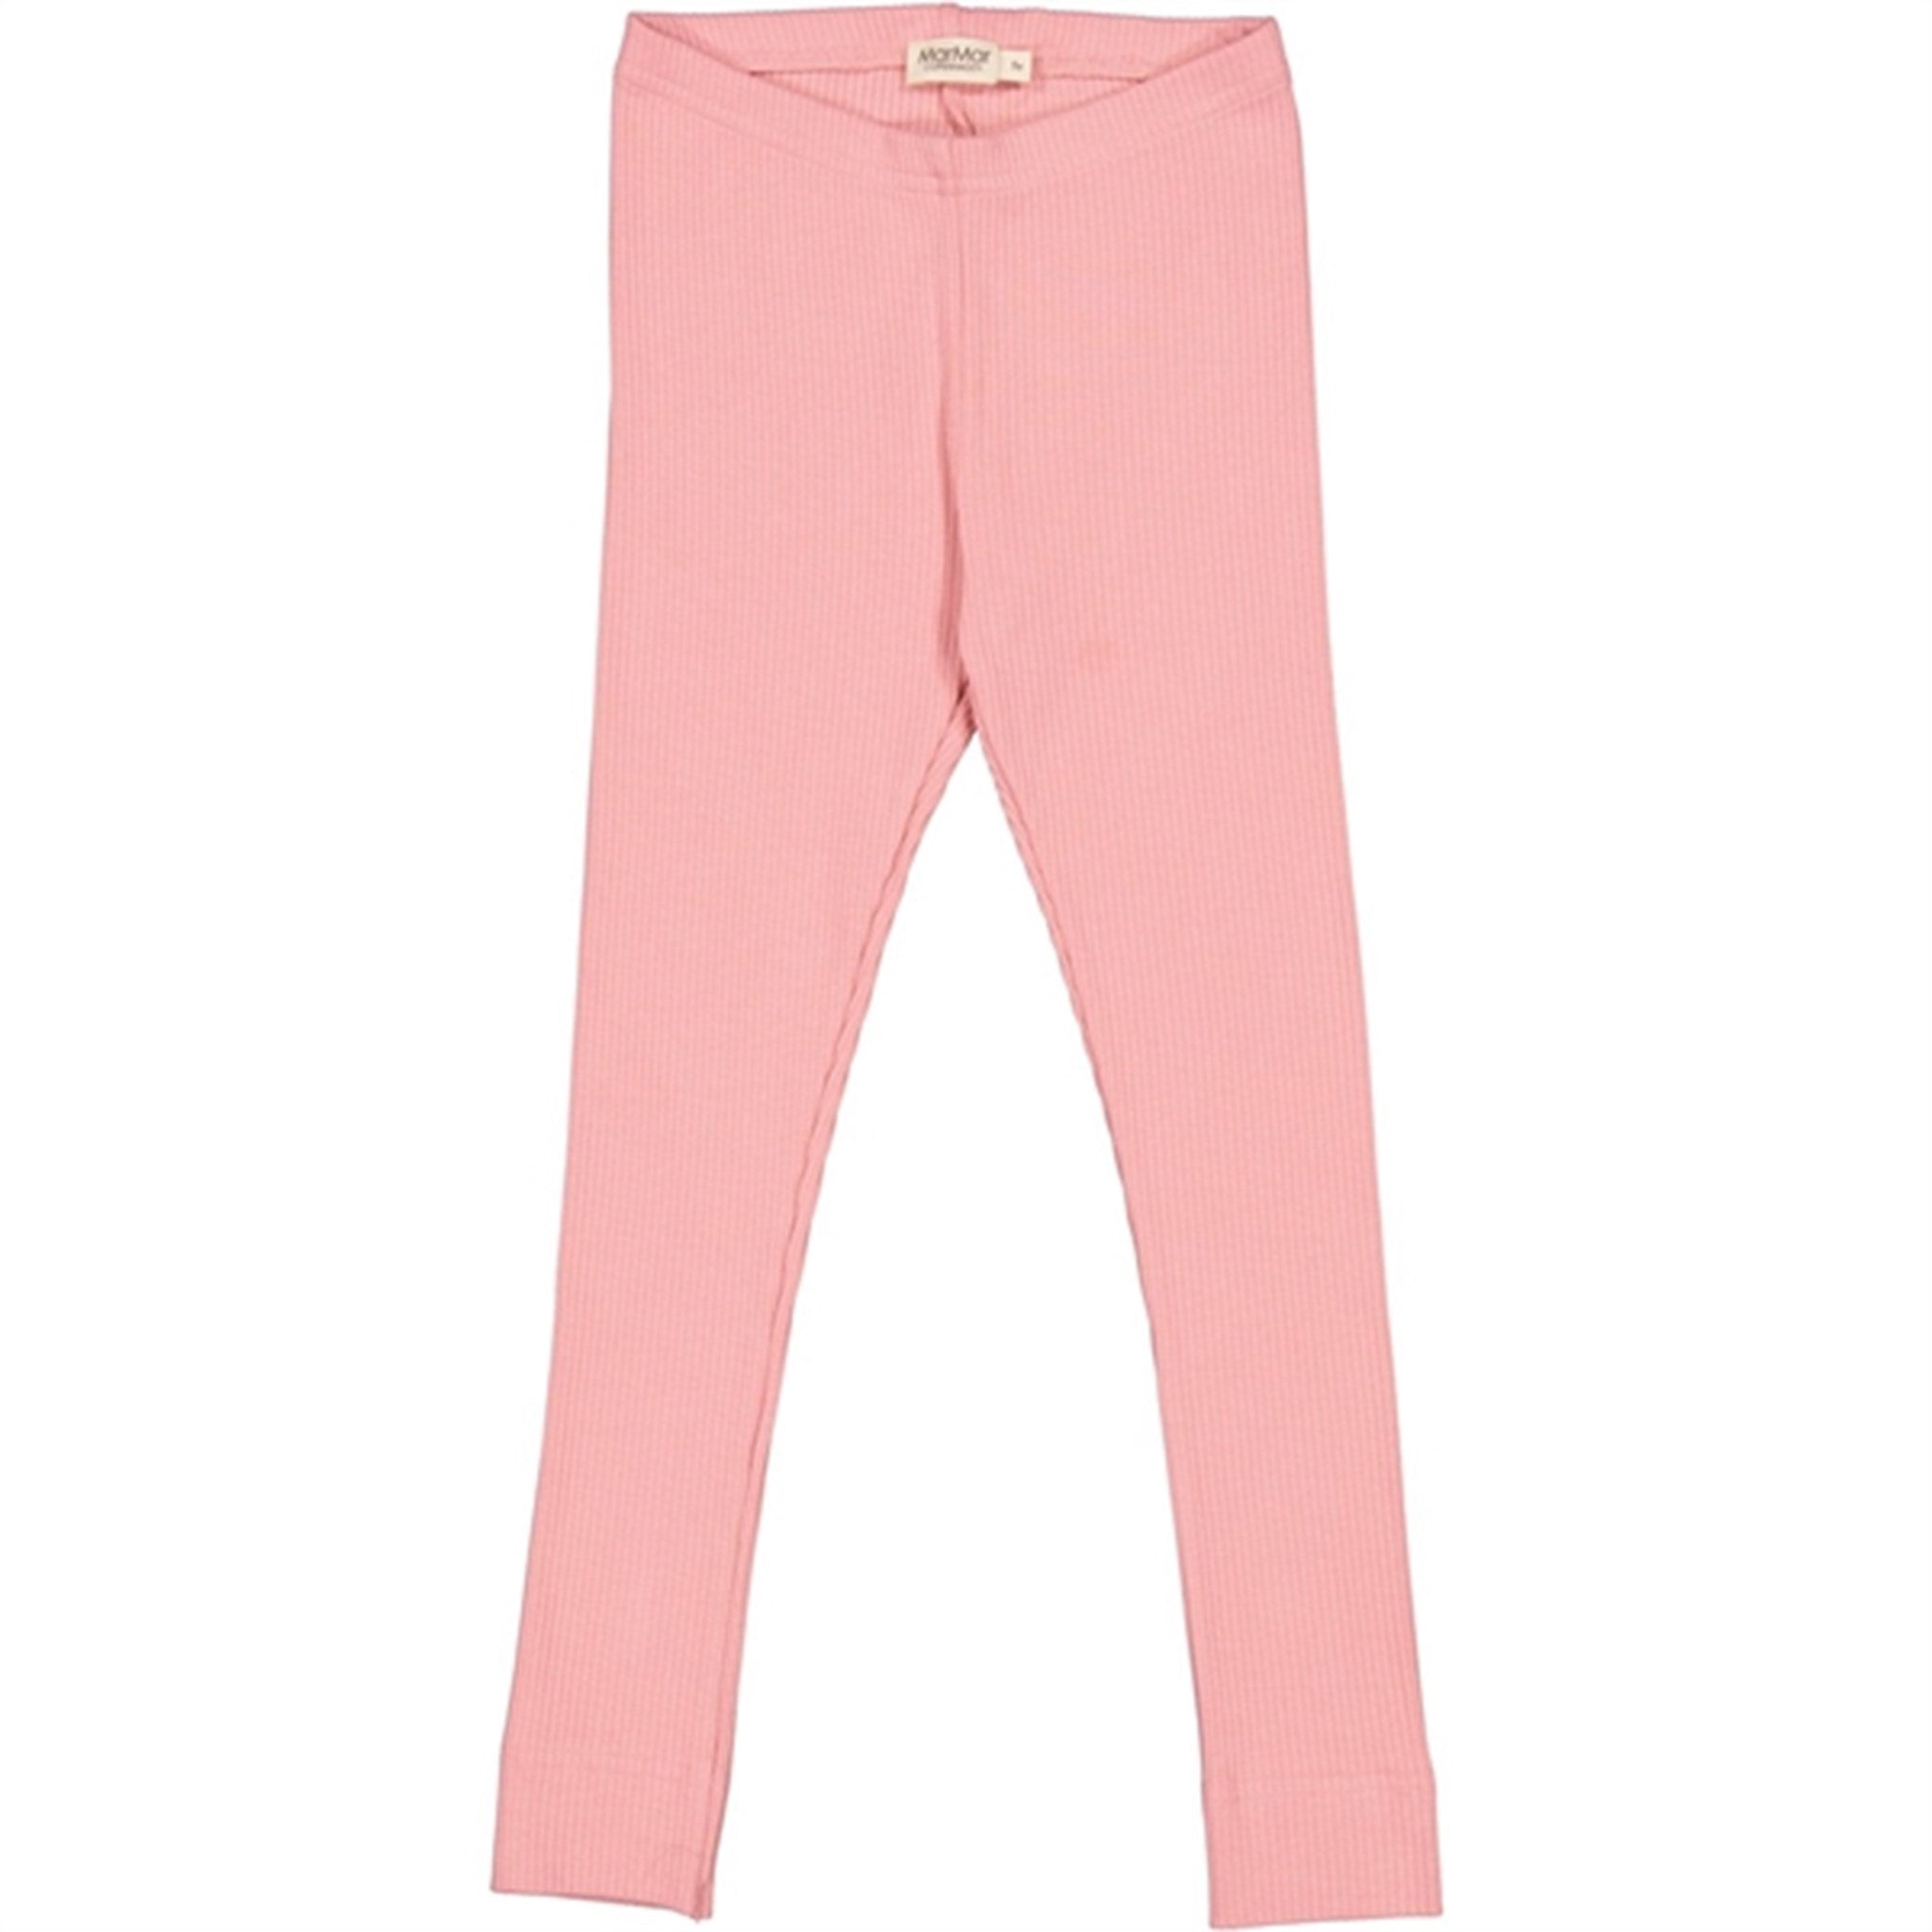 MarMar Modal Pink Delight Leggings 2